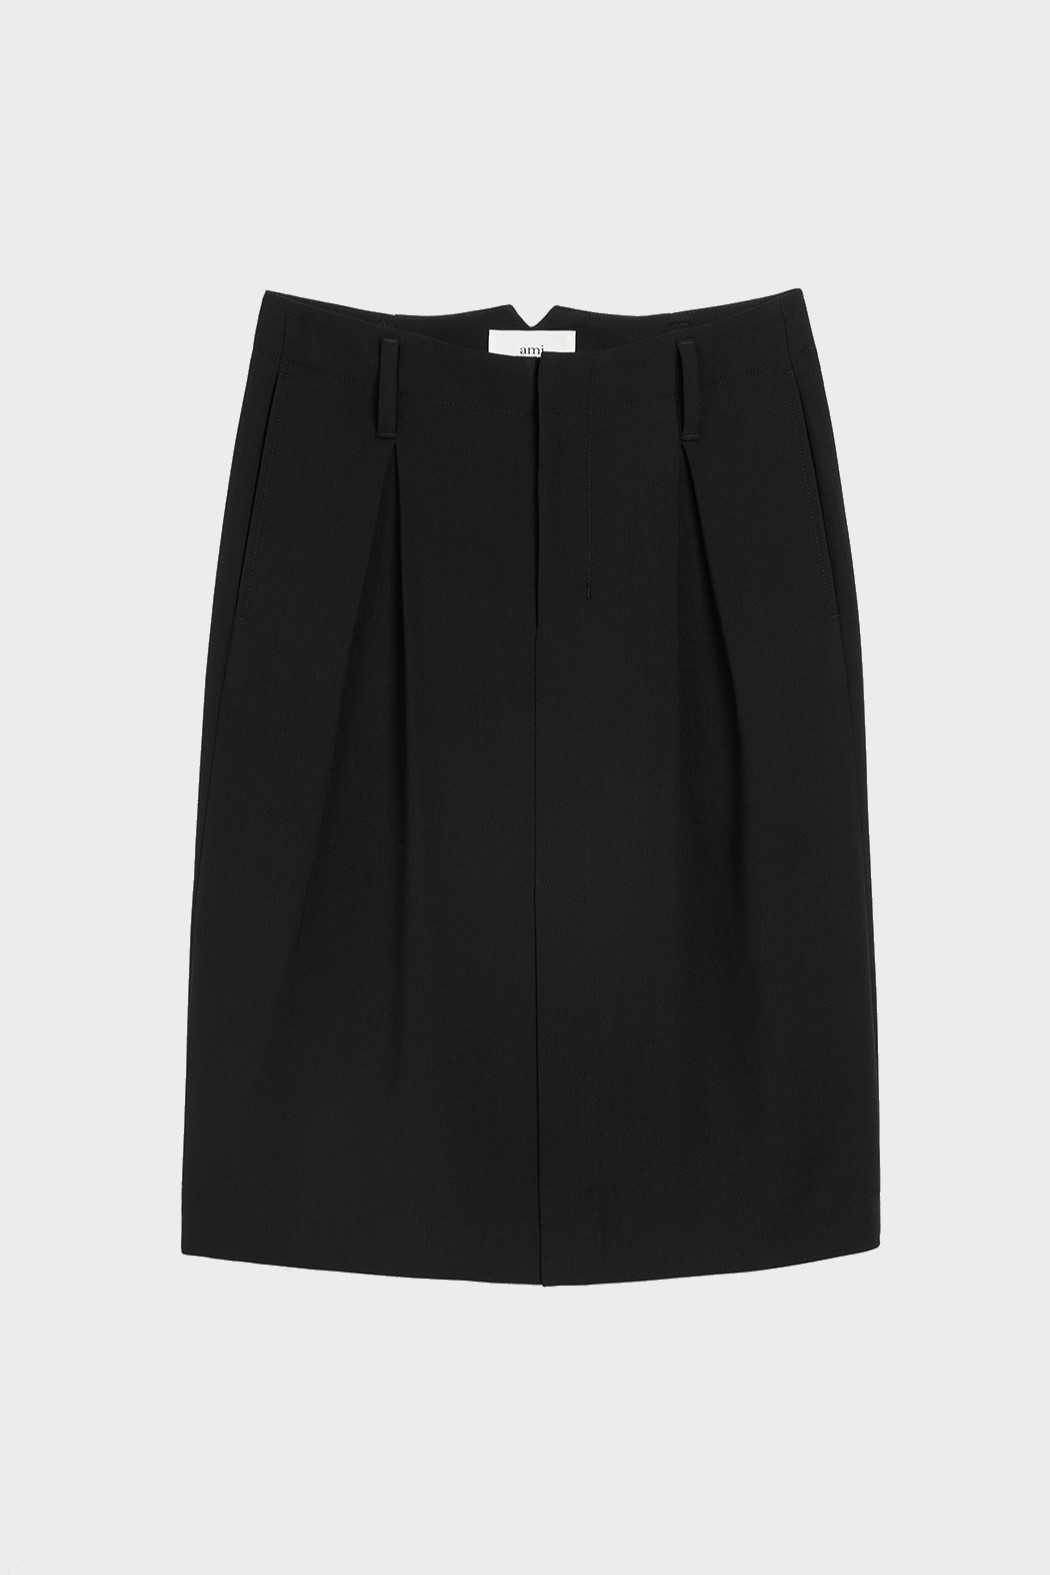 AMI PARIS Pencil Skirt in Black